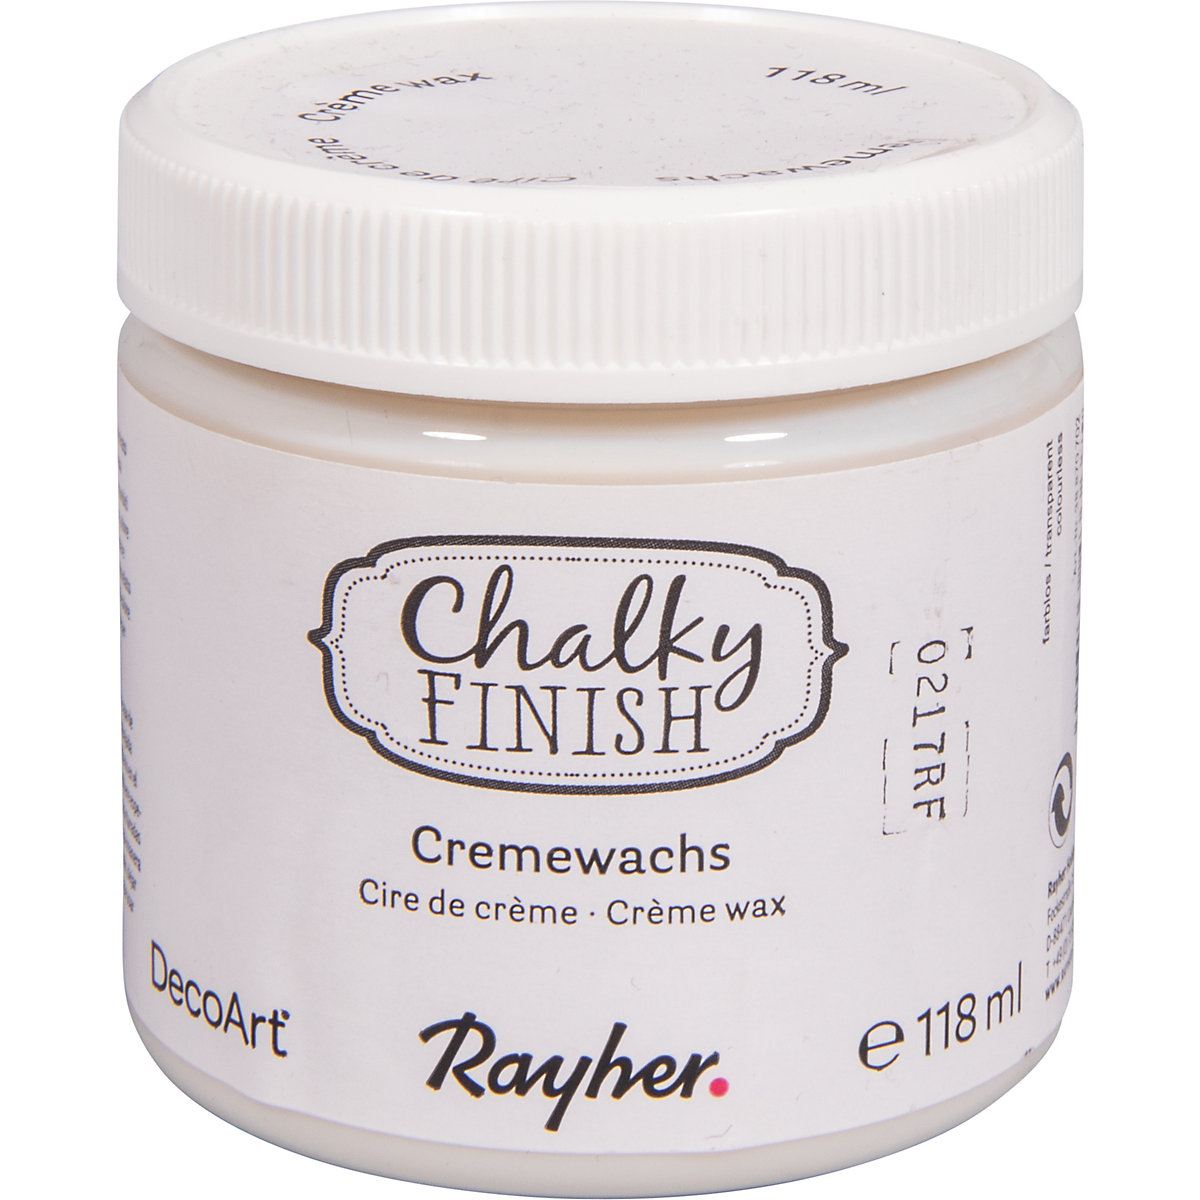 Rayher Chalky Finish Cremewachs 118 ml